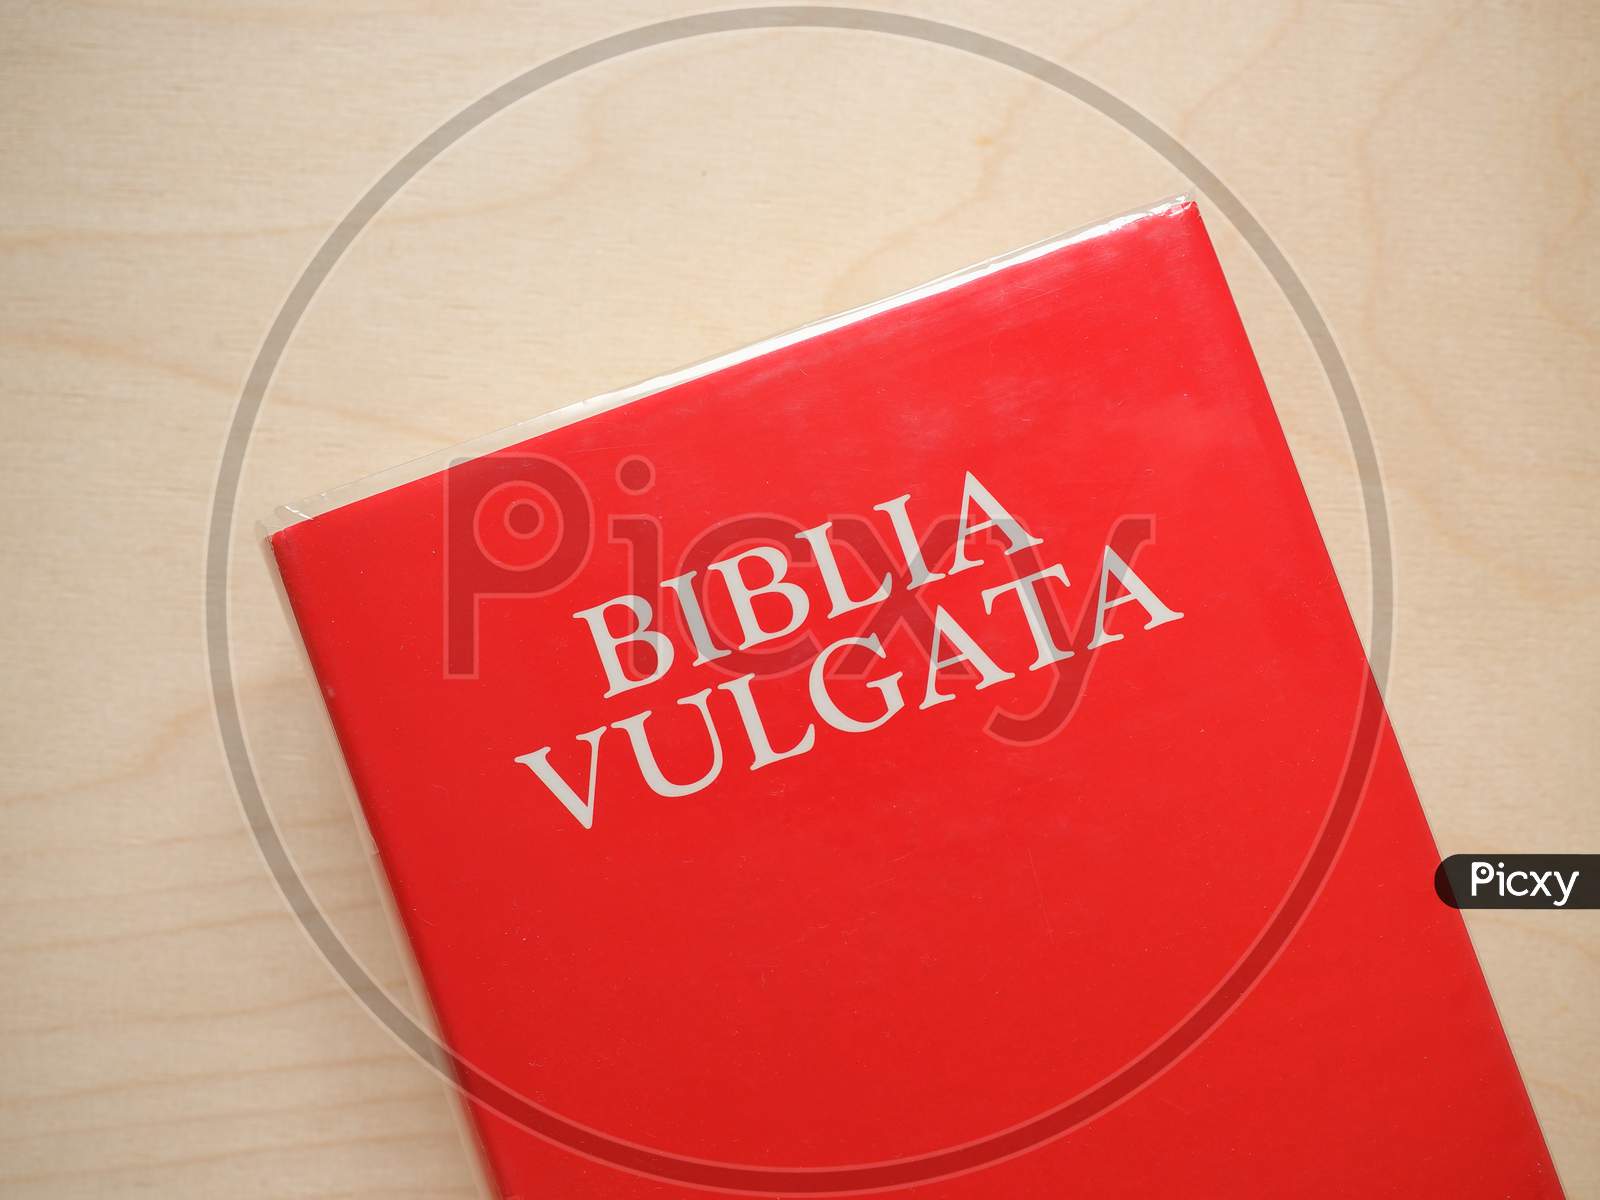 Biblia Vulgata (Vulgate Bible)